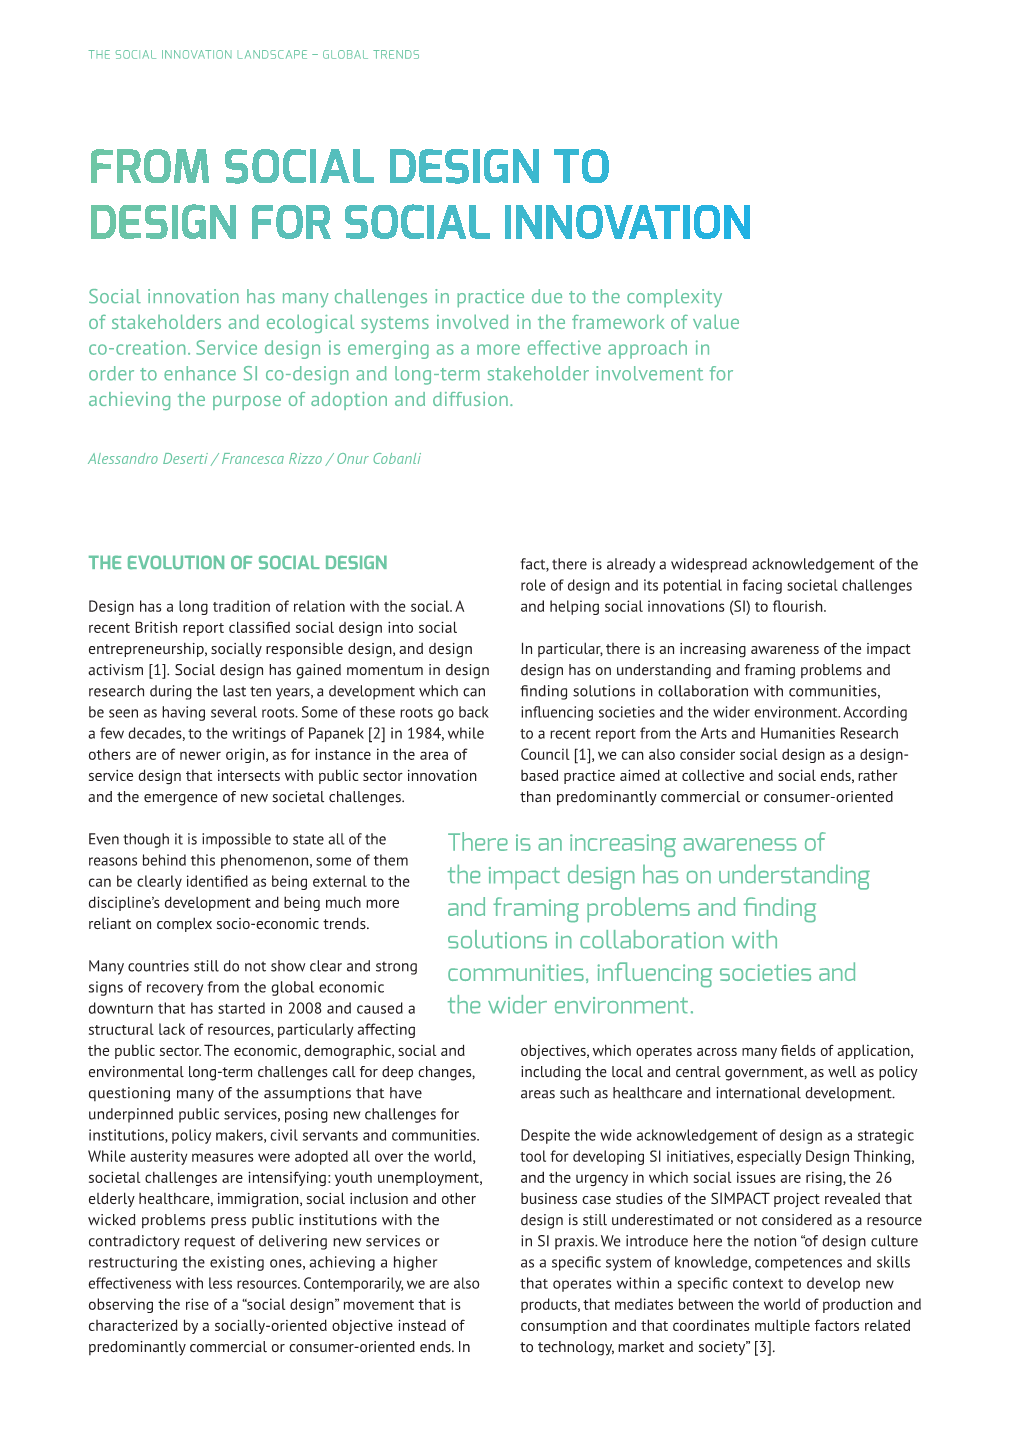 From Social Design to Design for Social Innovation